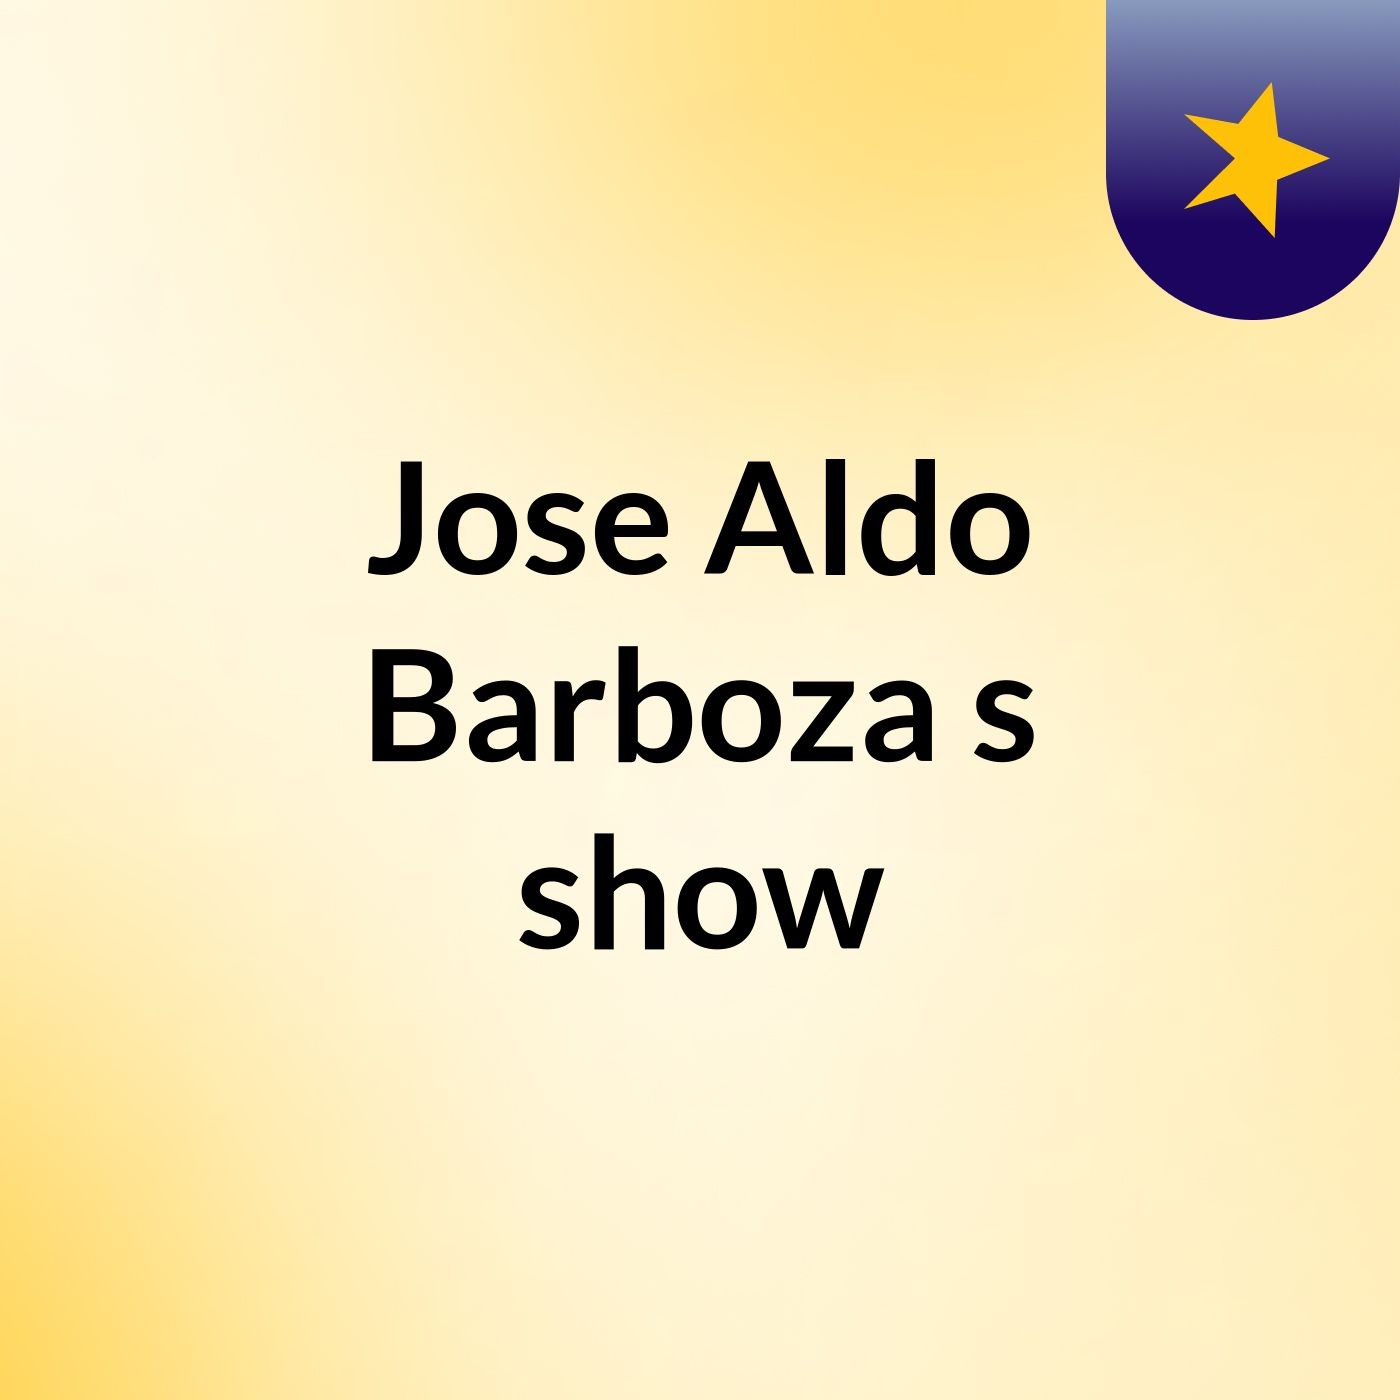 Jose Aldo Barboza's show